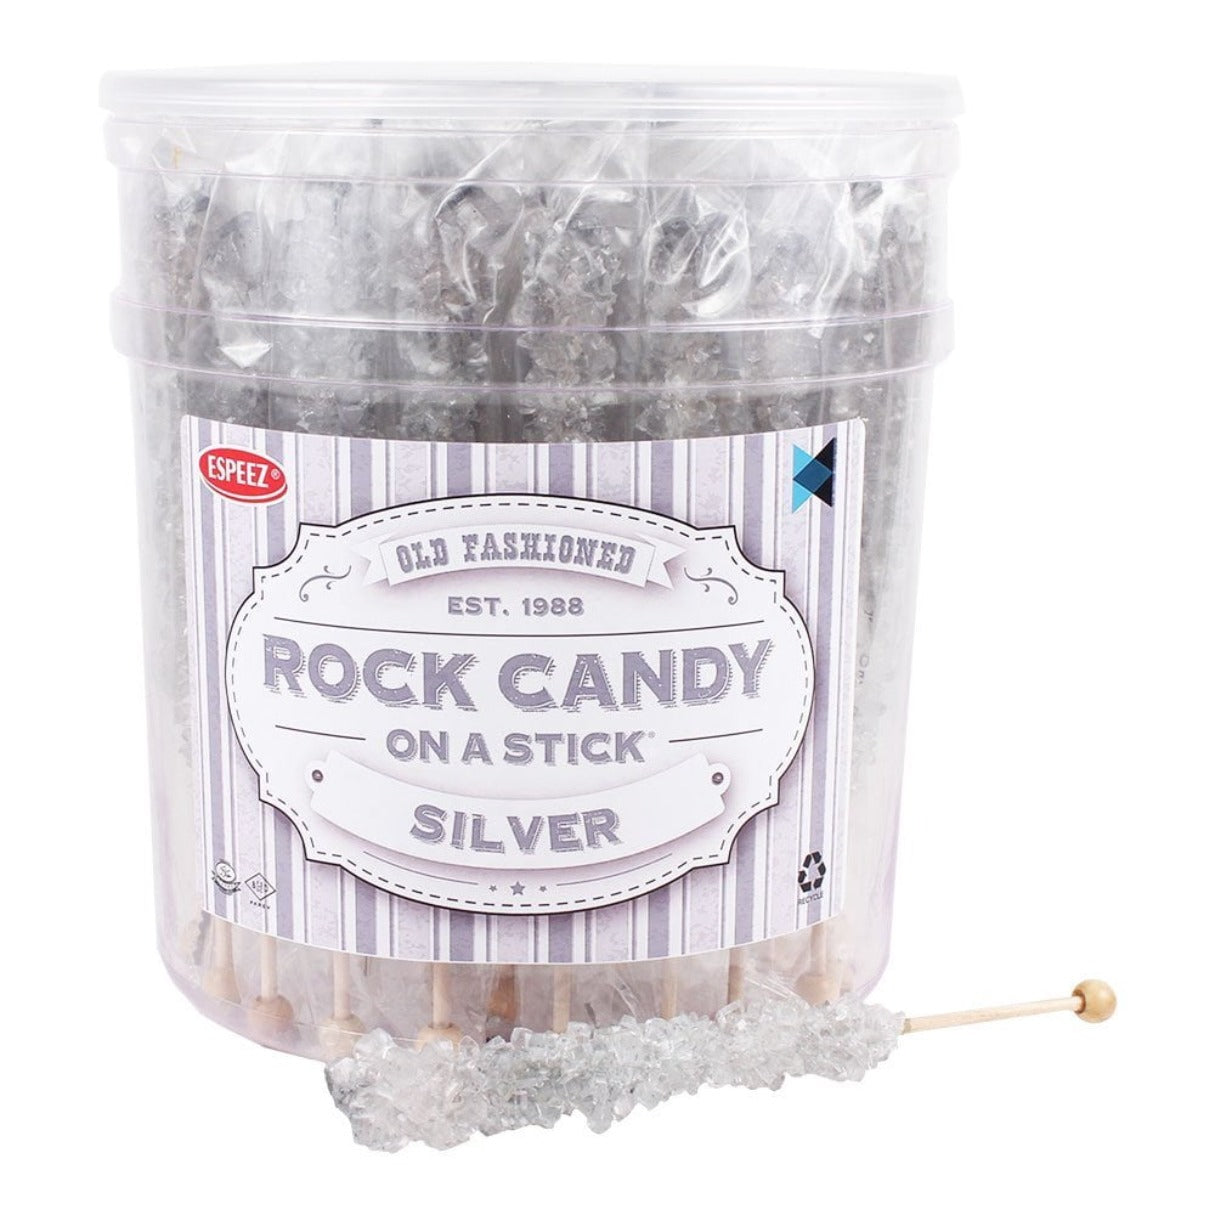 Espeez Rock Candy Sticks Silver Jar 0.8oz - 36ct